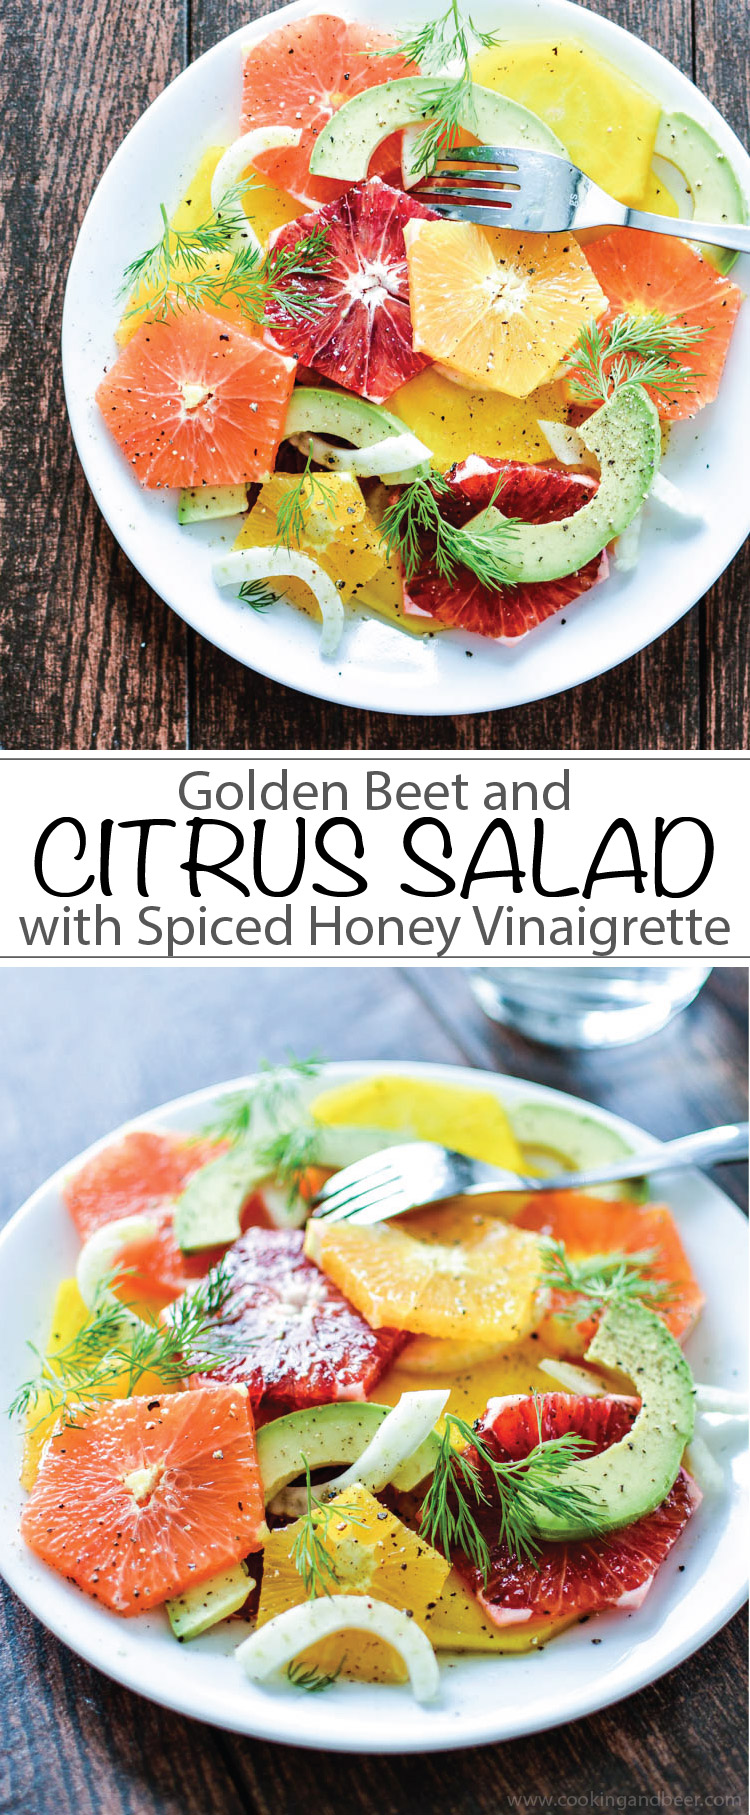 Golden Beet and Citrus Salad with Spiced Honey Vinaigrette | www.cookingandbeer.com | @jalanesulia